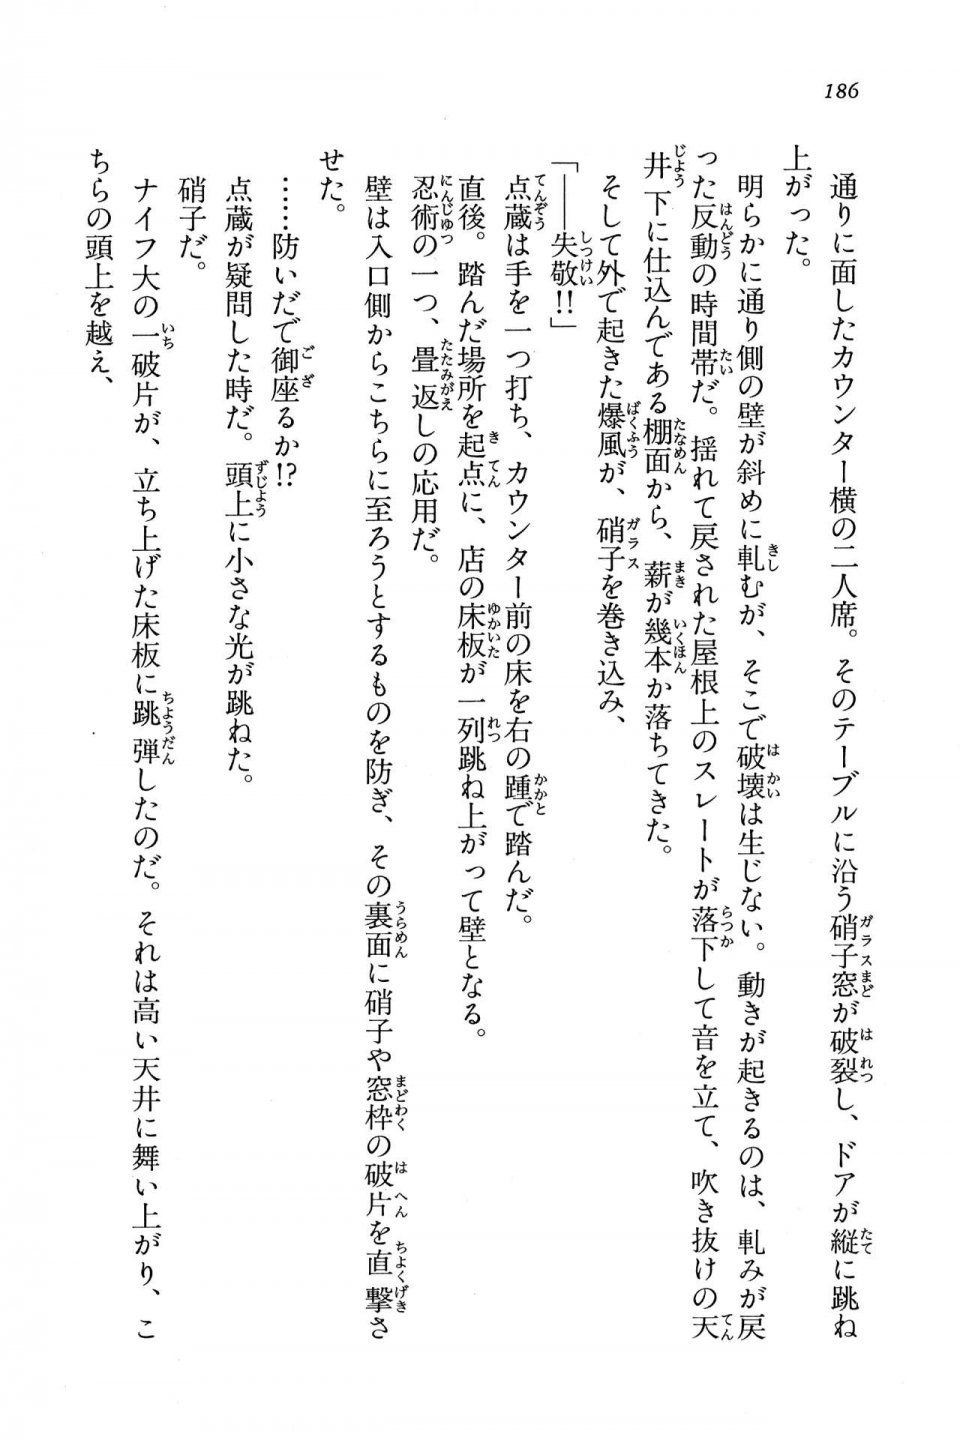 Kyoukai Senjou no Horizon BD Special Mininovel Vol 7(4A) - Photo #190